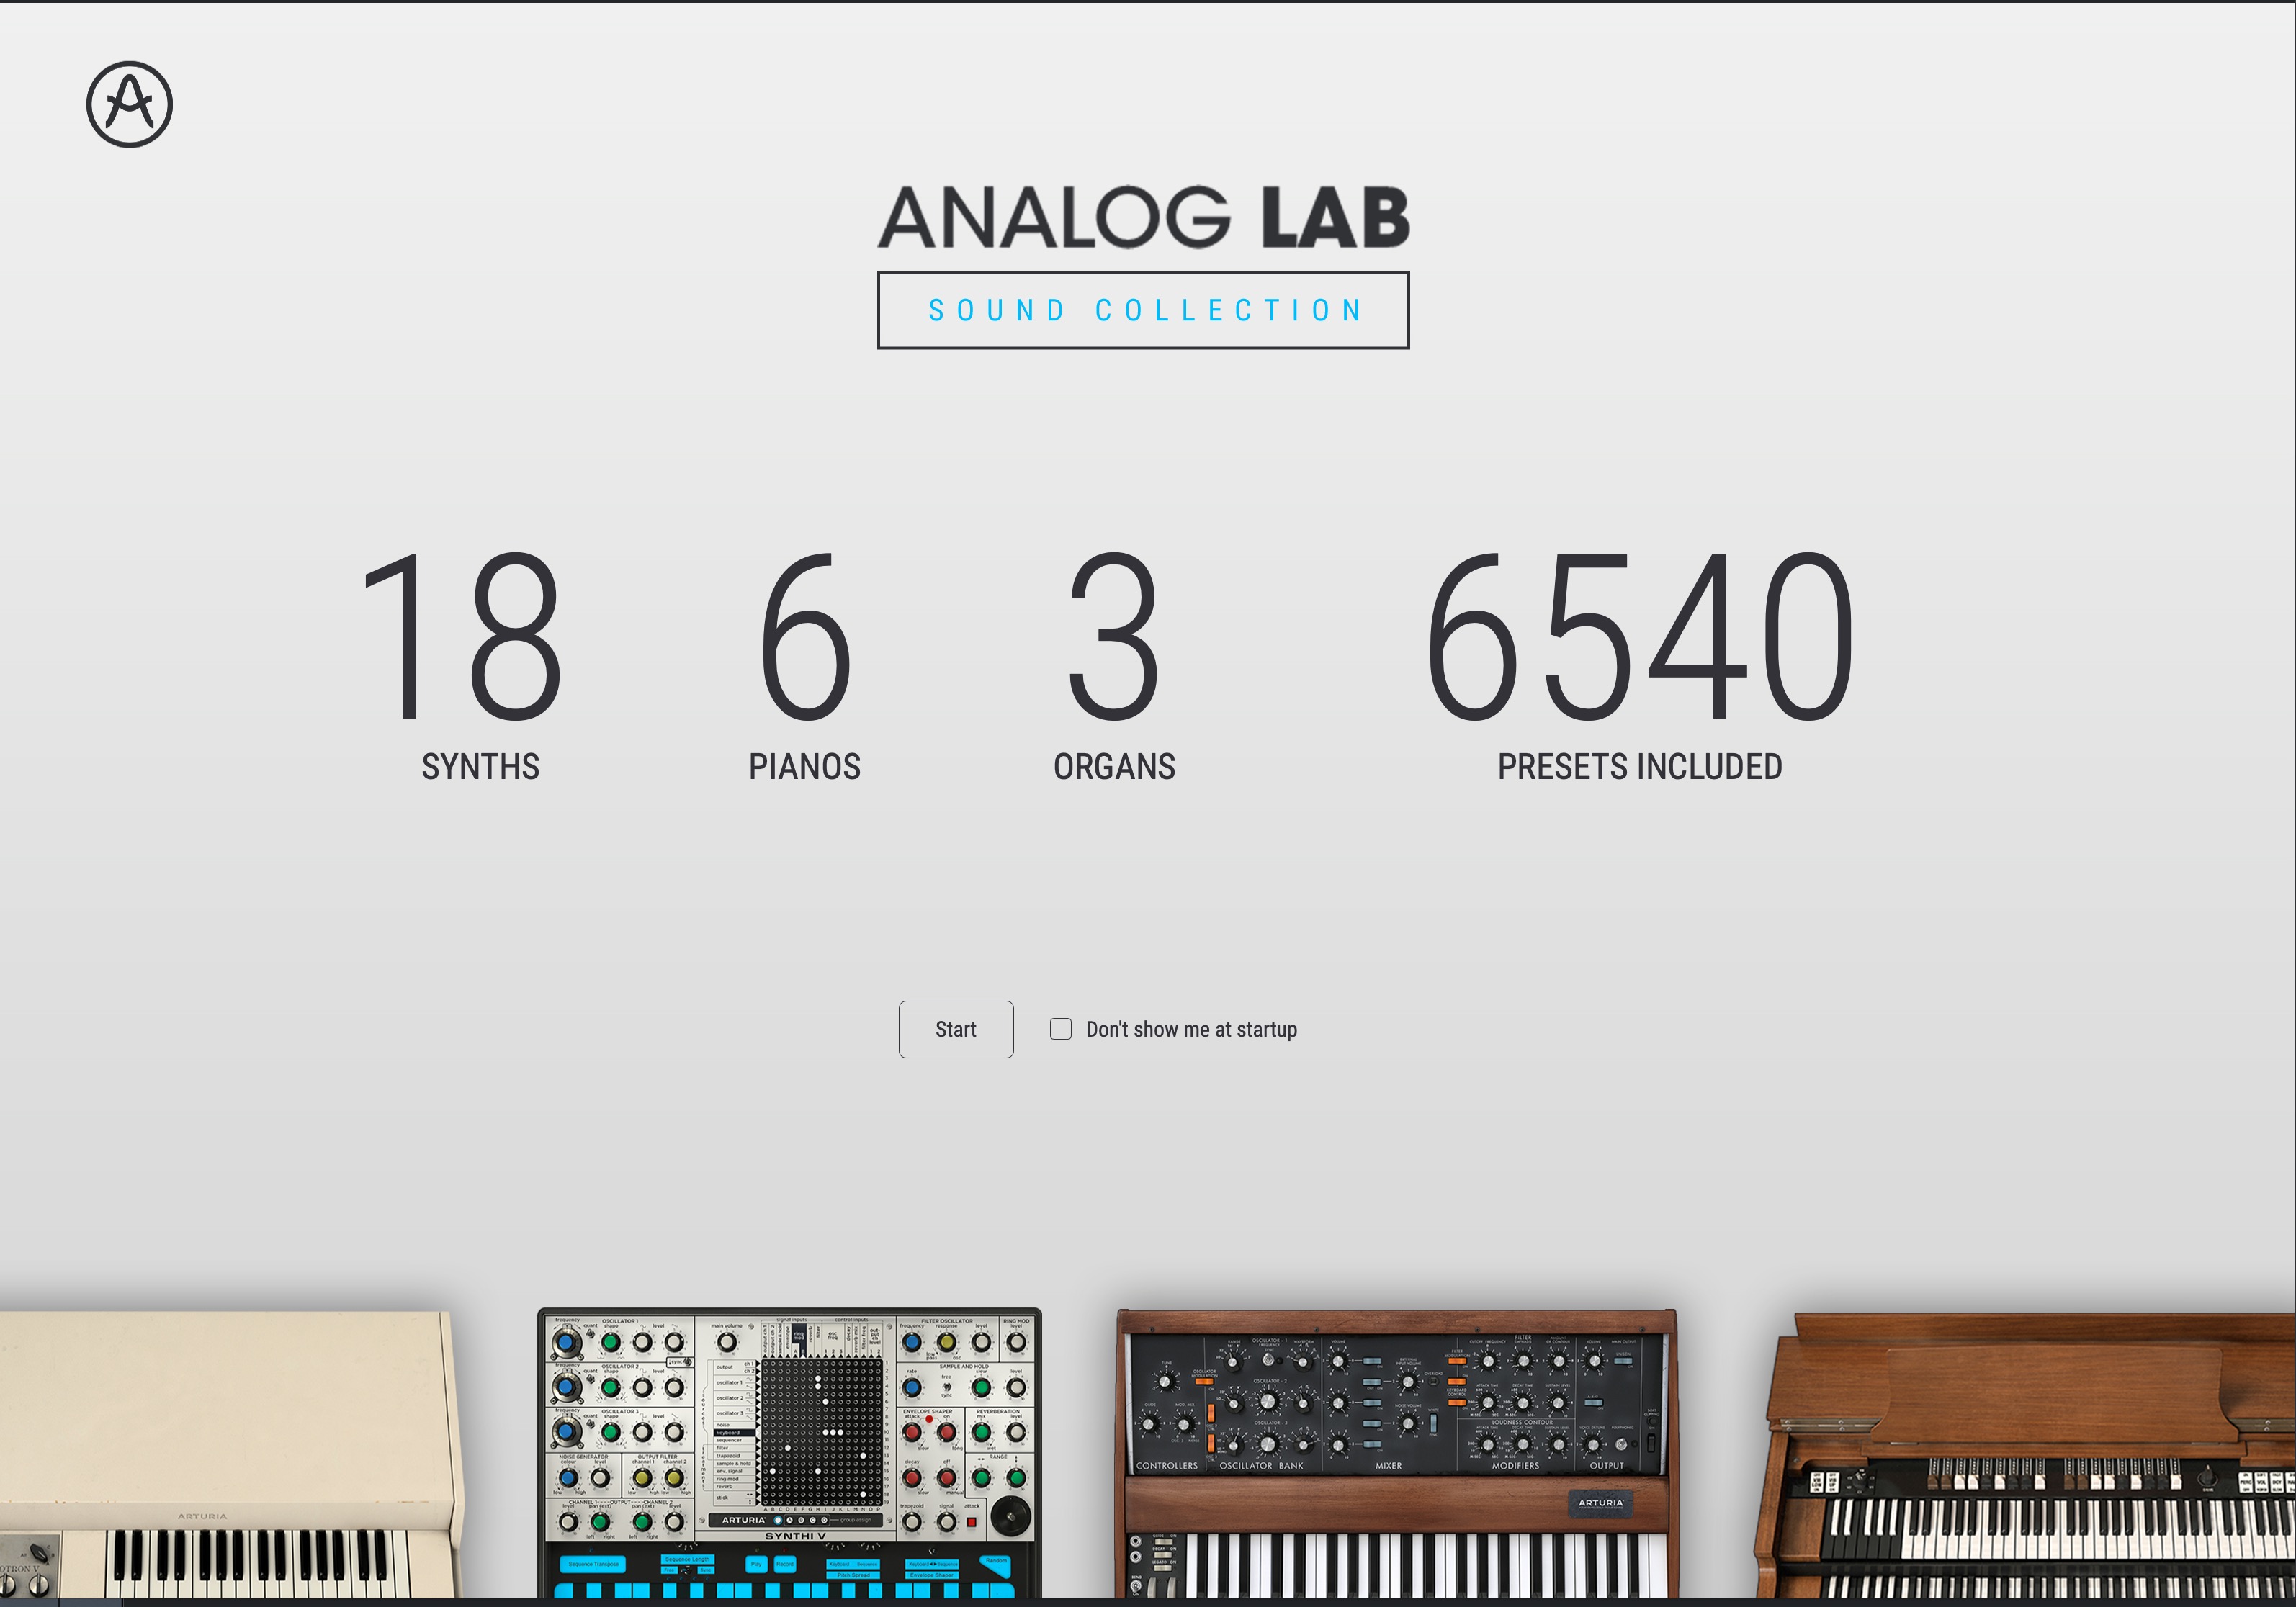 arturia analog lab 4 free download